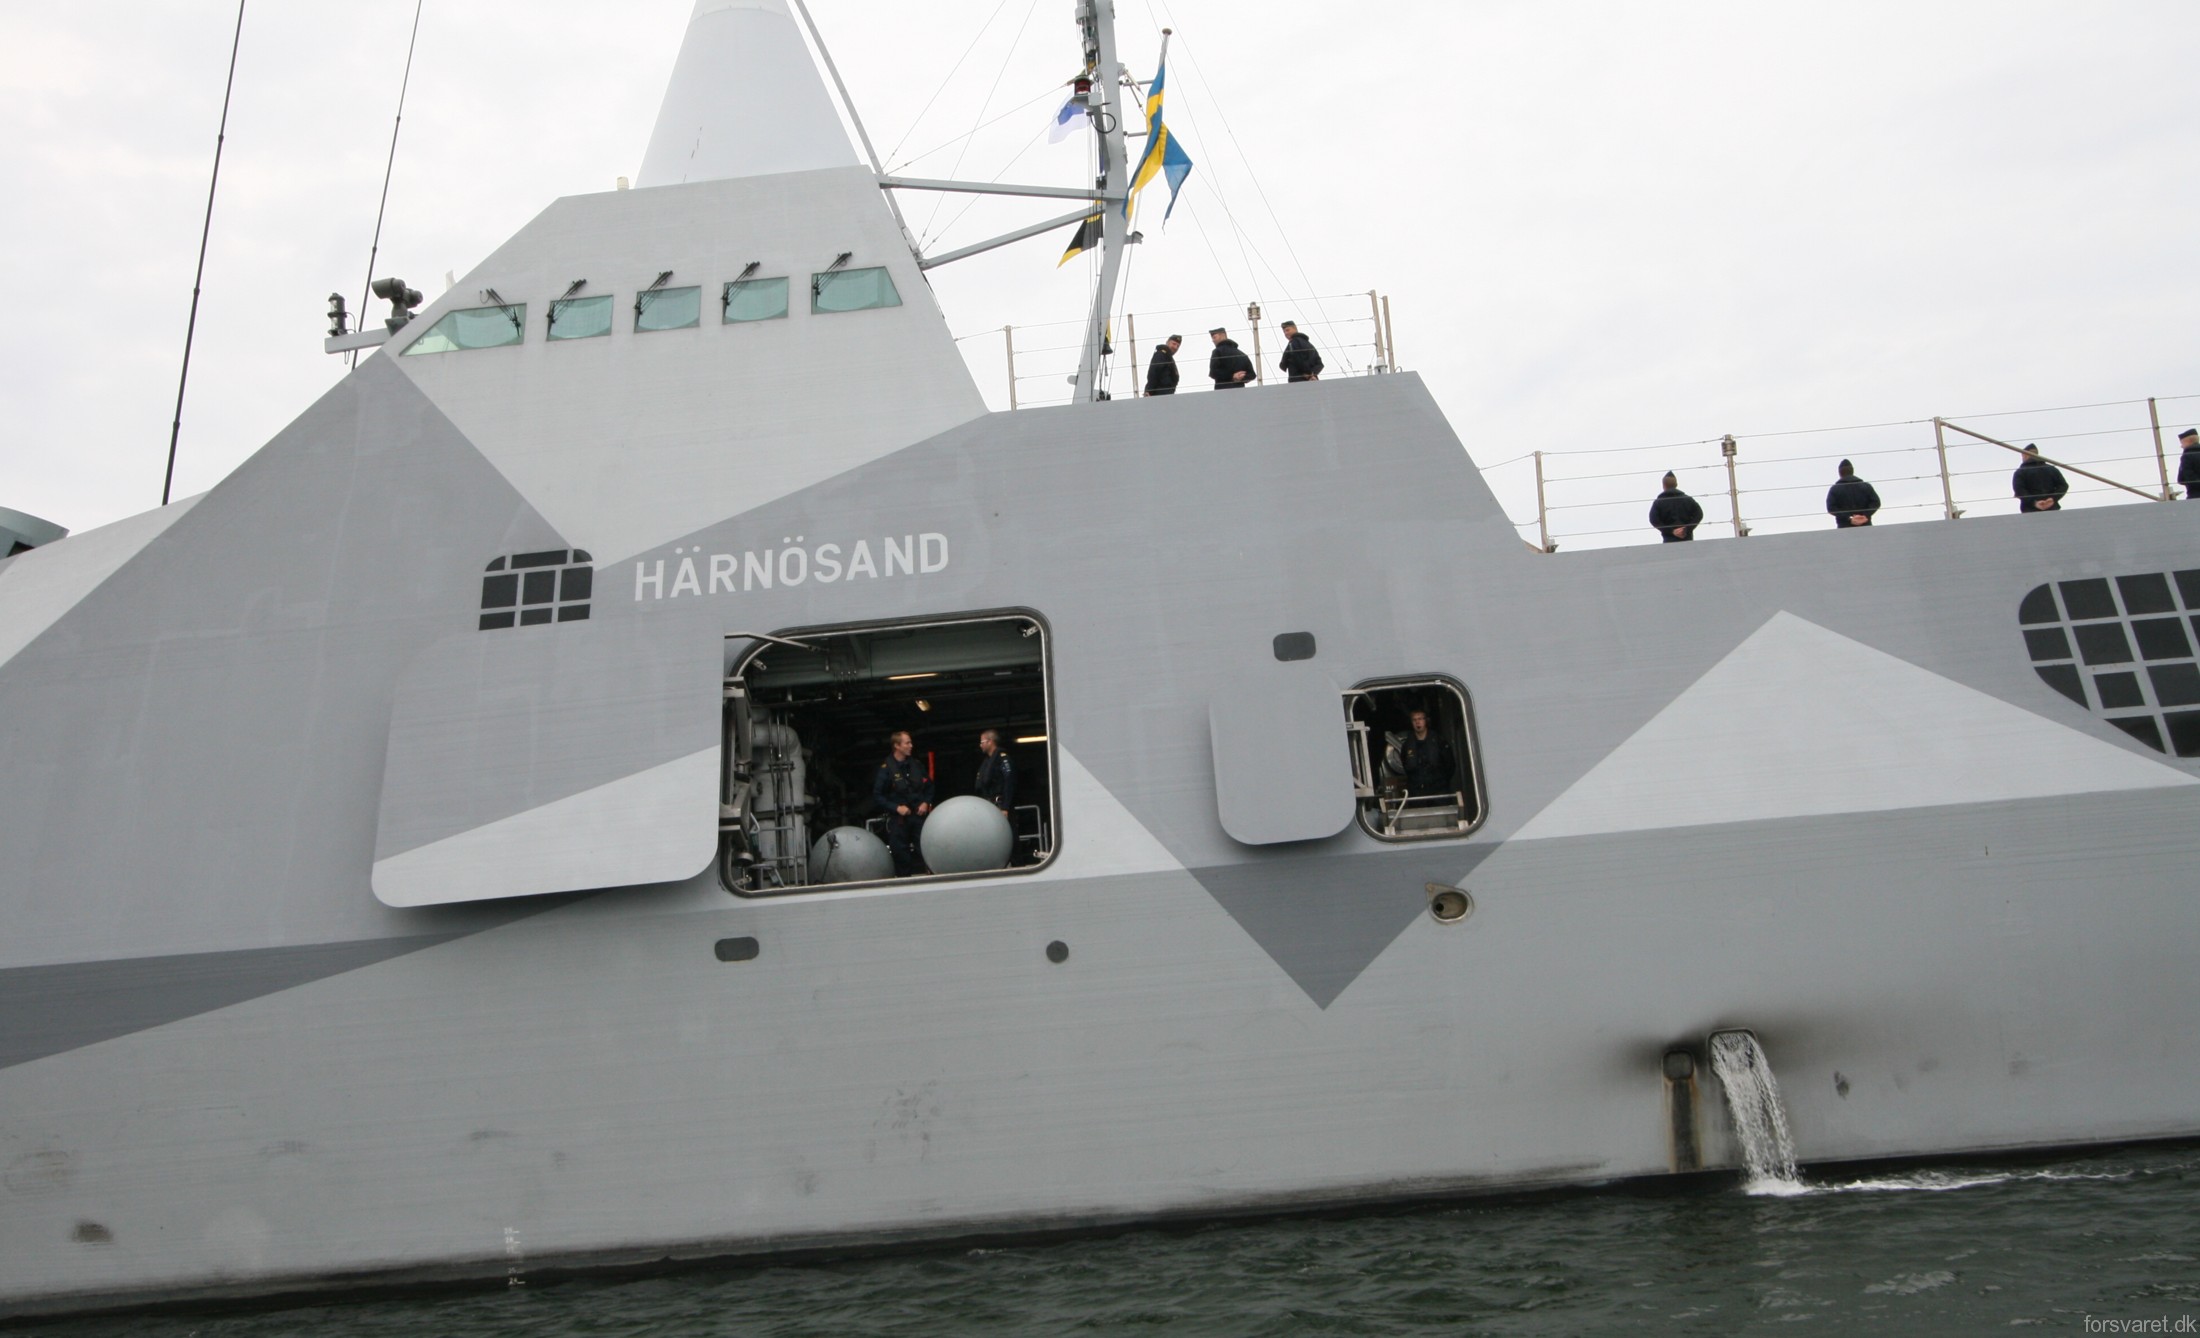 k33 hswms hms harnosand visby class corvette royal swedish navy svenska marinen 19